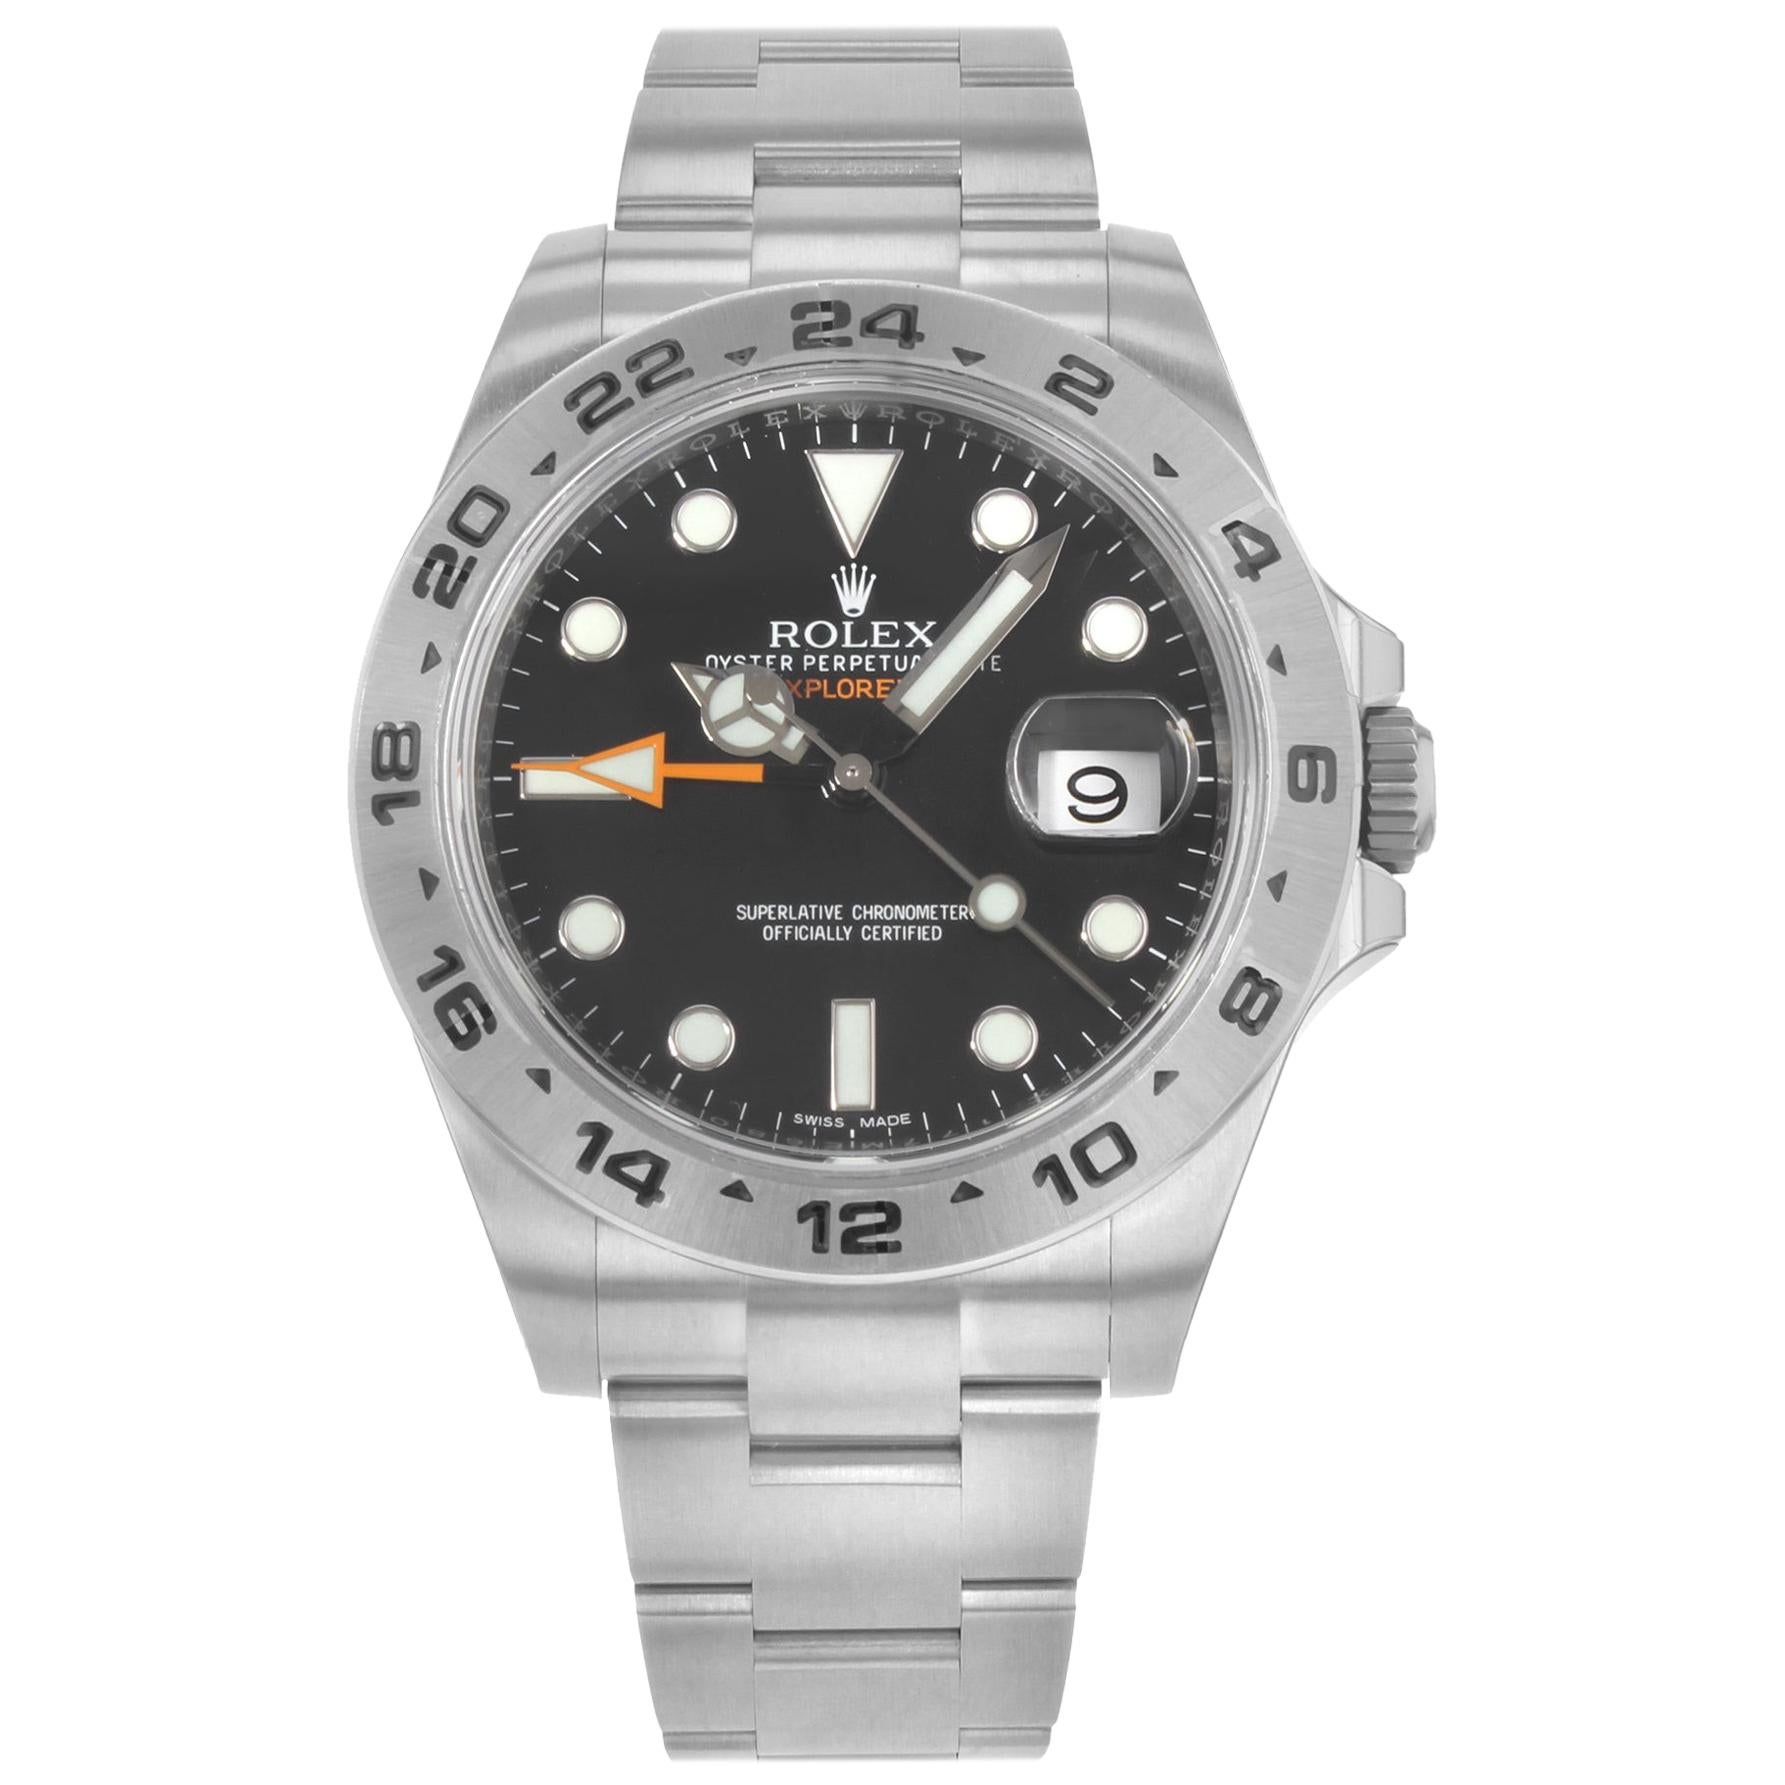 Rolex Explorer II 216570 BKSO Black Dial GMT Steel Automatic Men's Watch